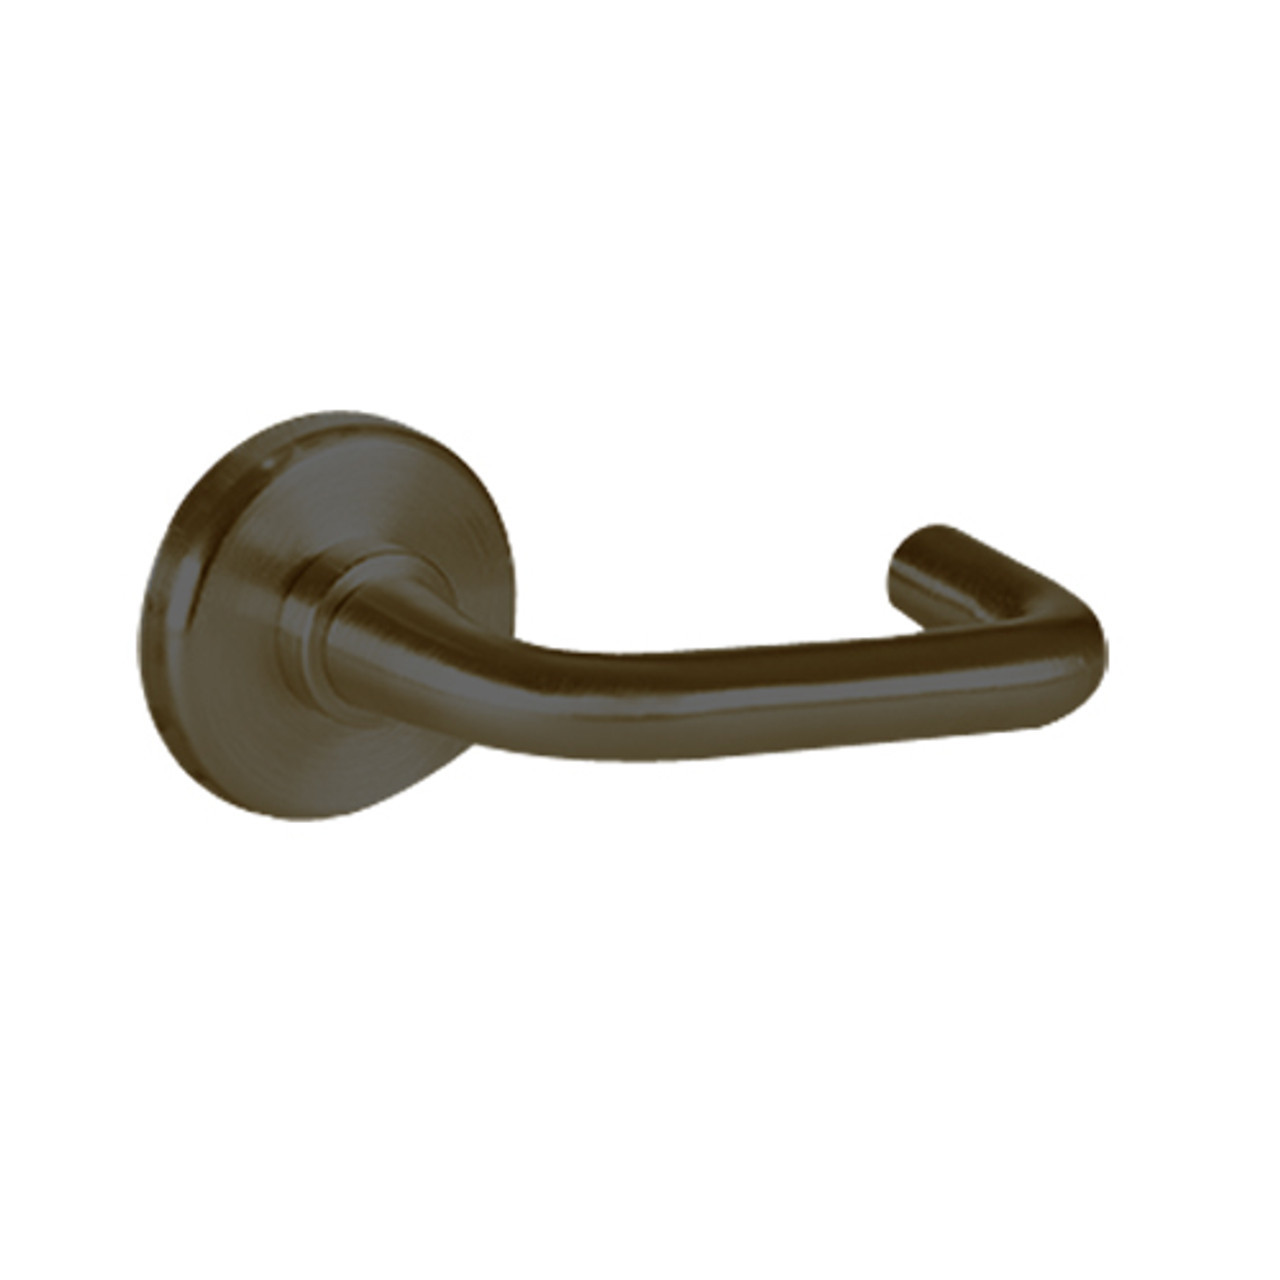 45HW7TDEL3H613 Best 40HW series Single Key Deadbolt Fail Safe Electromechanical Mortise Lever Lock with Solid Tube w/ Return Style in Oil Rubbed Bronze